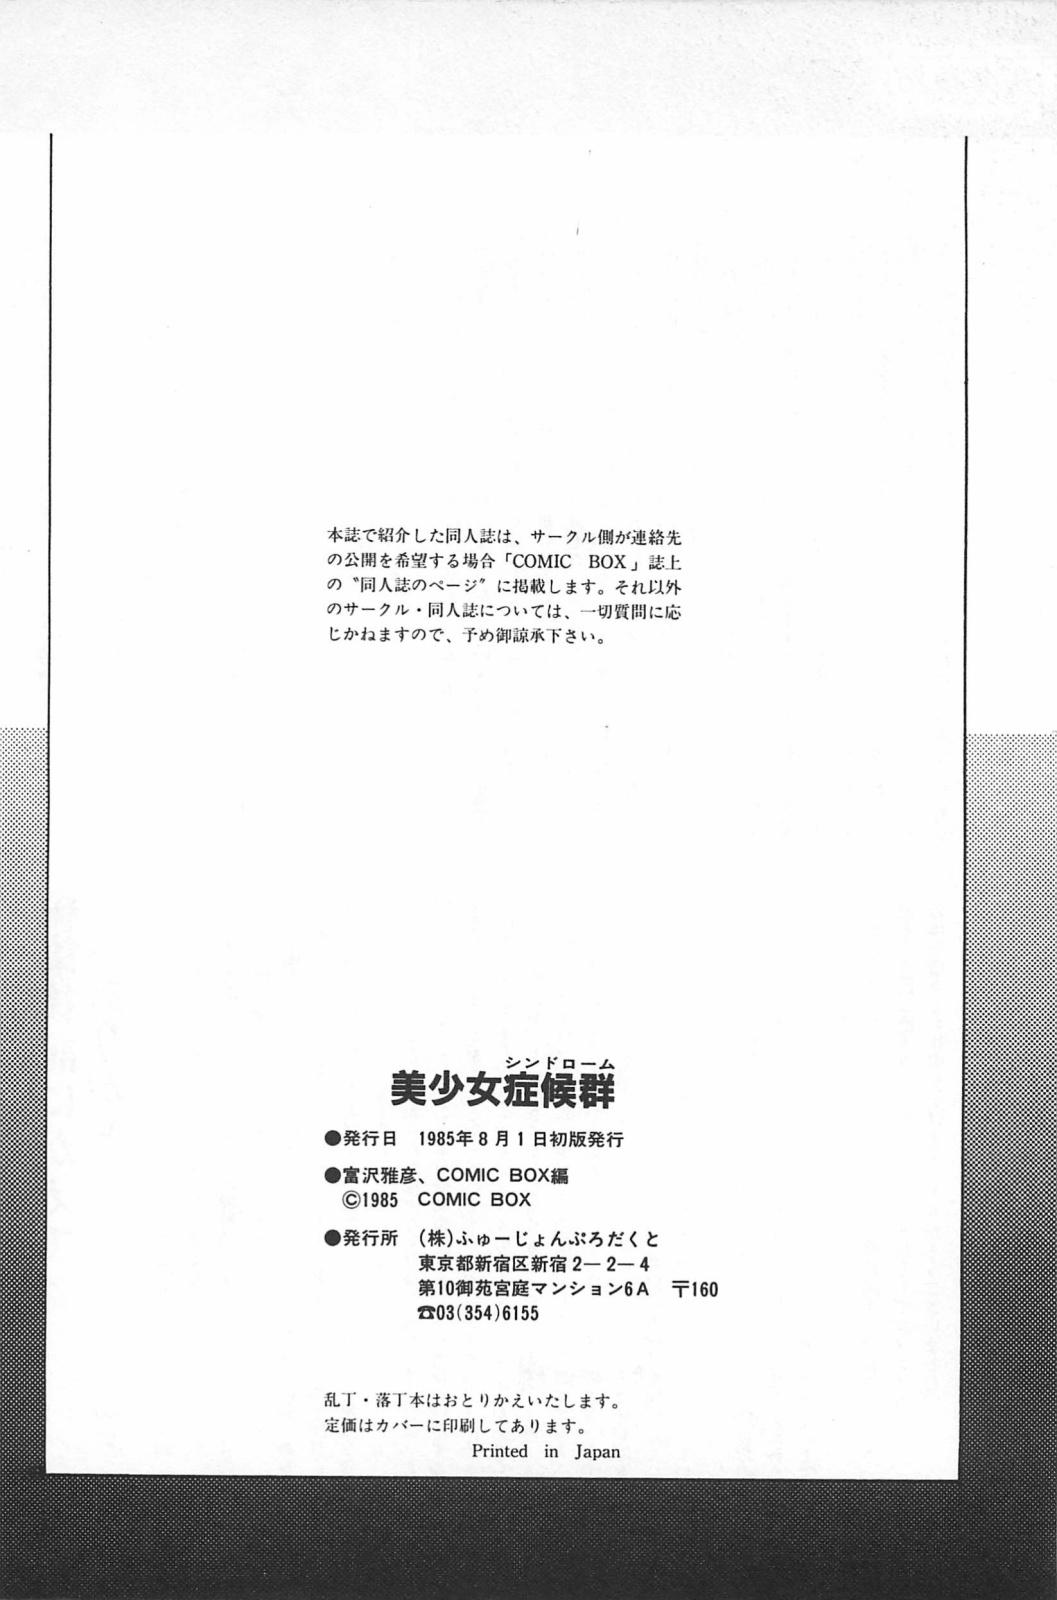 Trans Bishoujo Syndrome - Lolita syndrome - Urusei yatsura Voyeur - Page 180